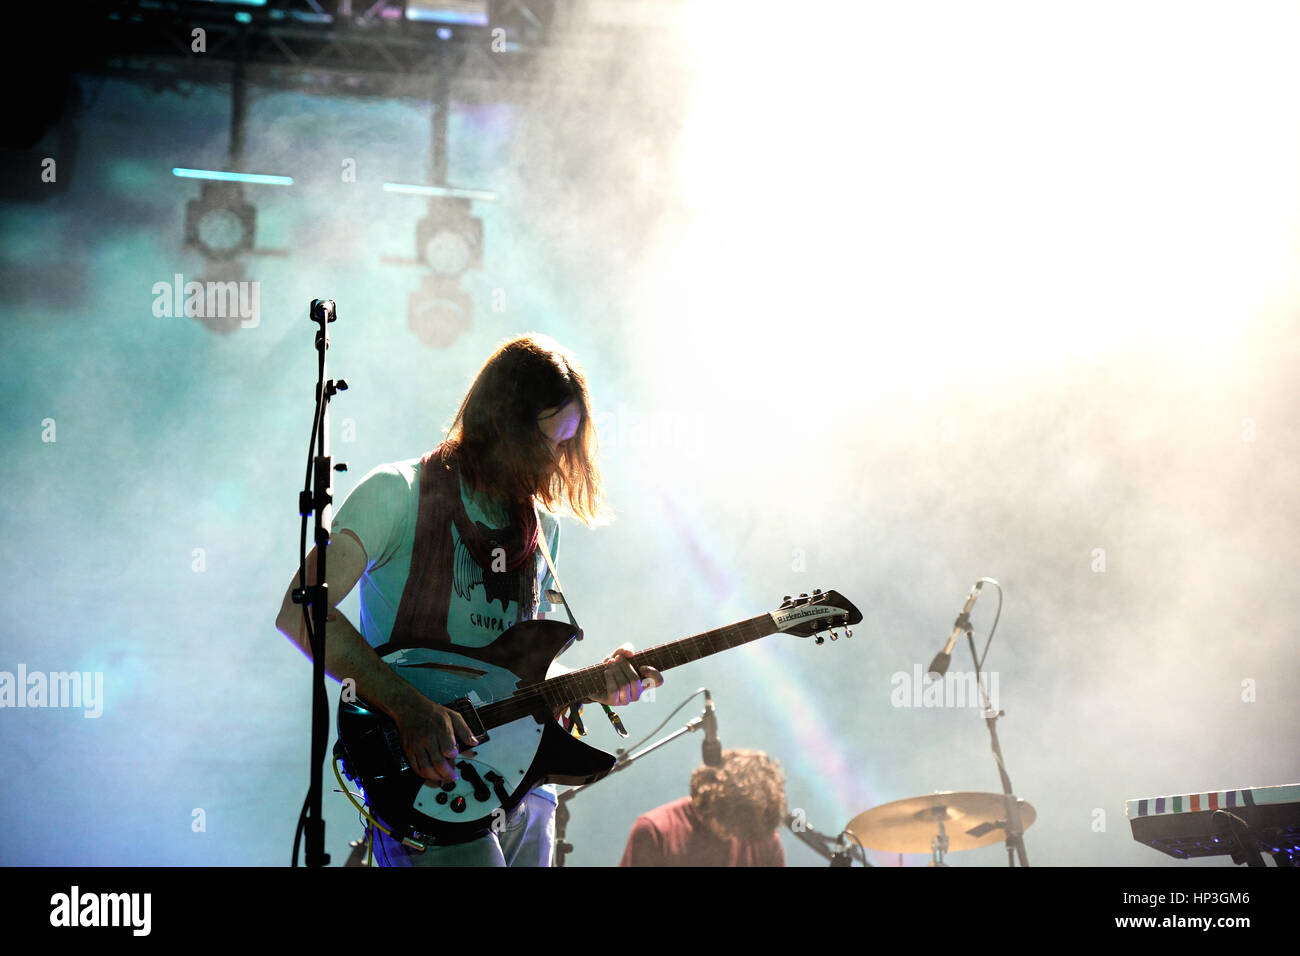 BENICASSIM, SPAIN - JULY 18: Tame Impala (band) performs at FIB Festival on July 18, 2014 in Benicassim, Spain. Stock Photo